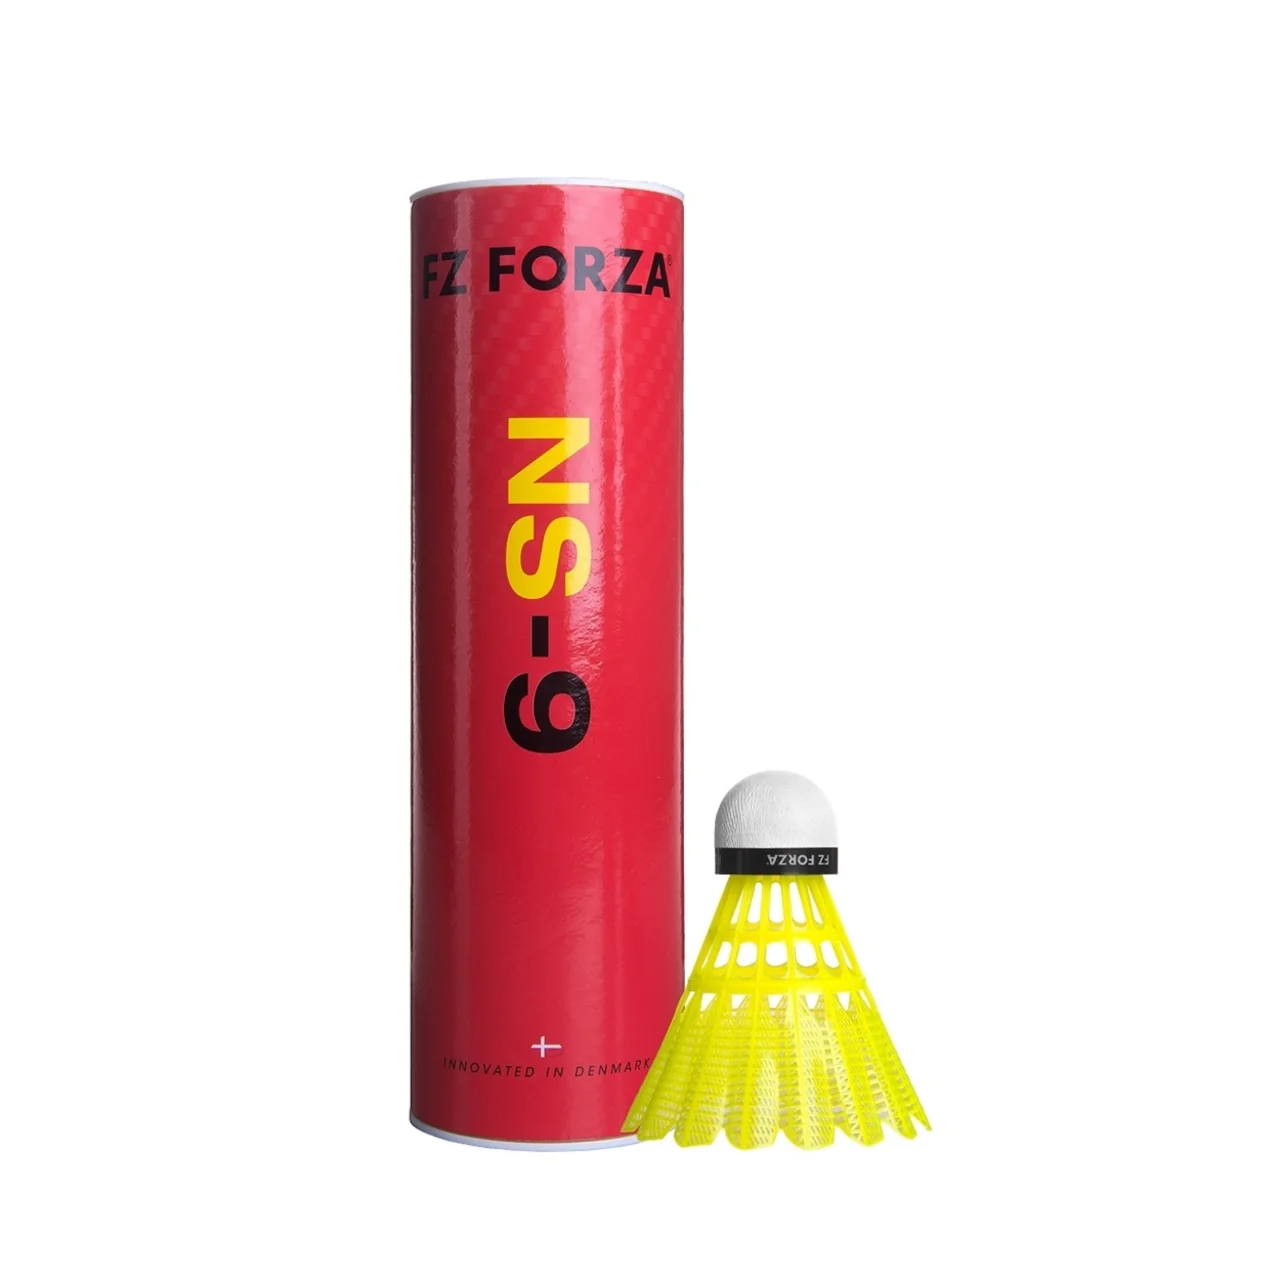 FZ Forza NS 9 1 rør (6 bolde)